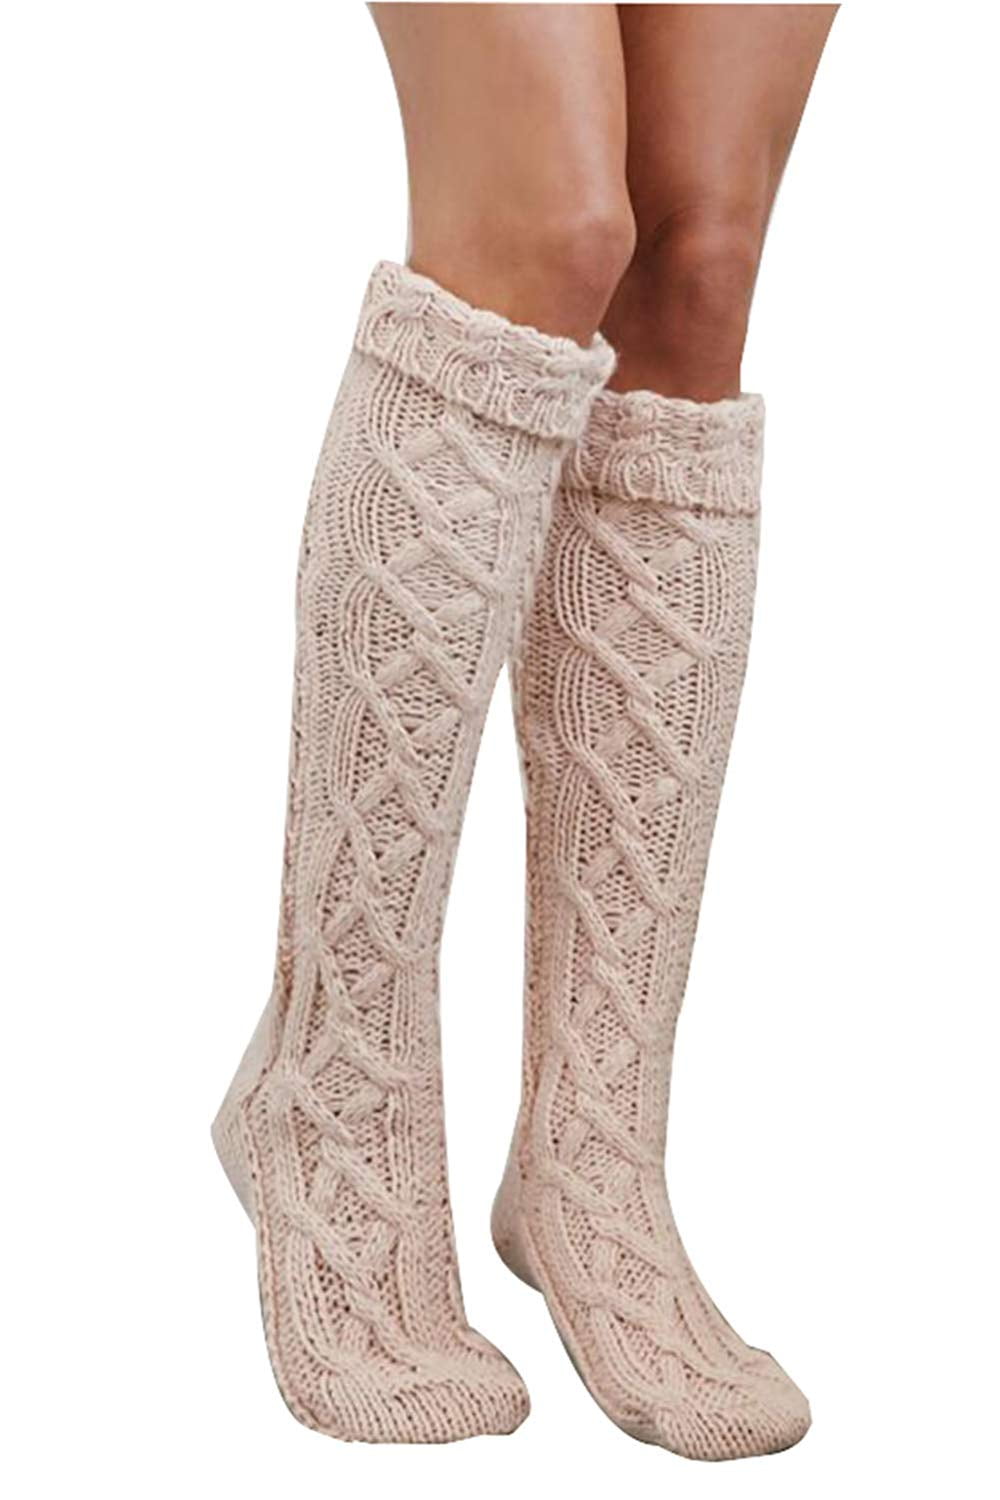 Mwzzpenpenpen Women Christmas Warm Thigh High Long Stockings Knit Over Knee Socks Xmas